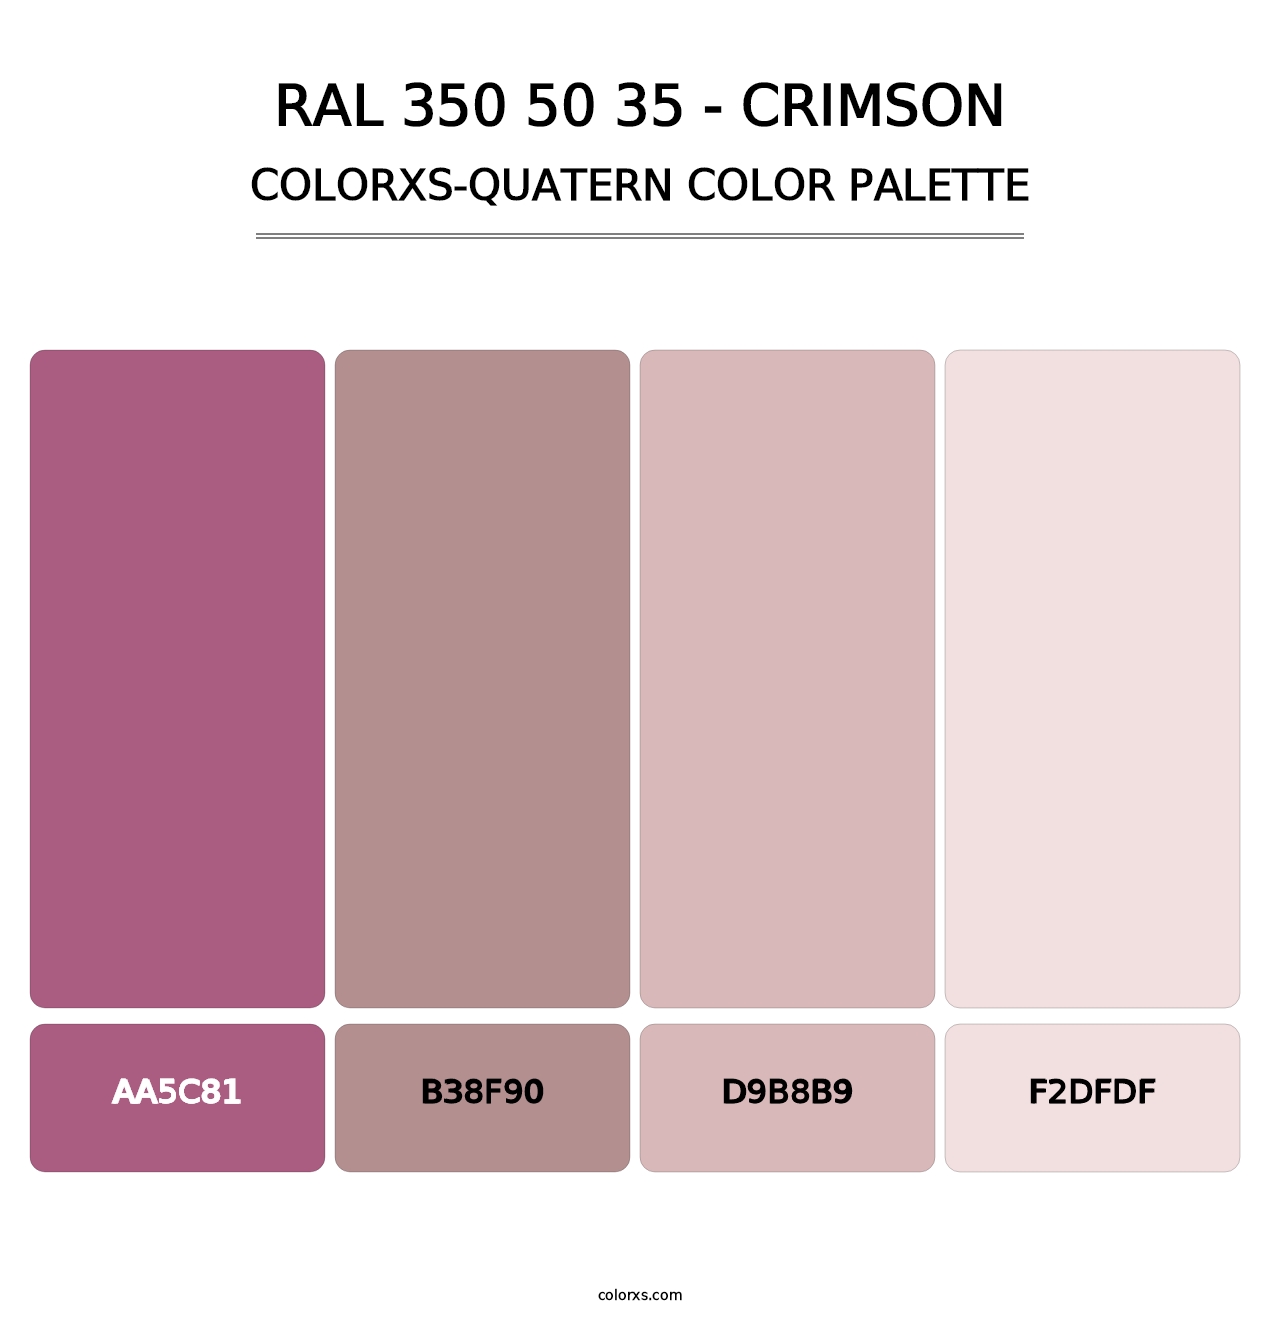 RAL 350 50 35 - Crimson - Colorxs Quatern Palette